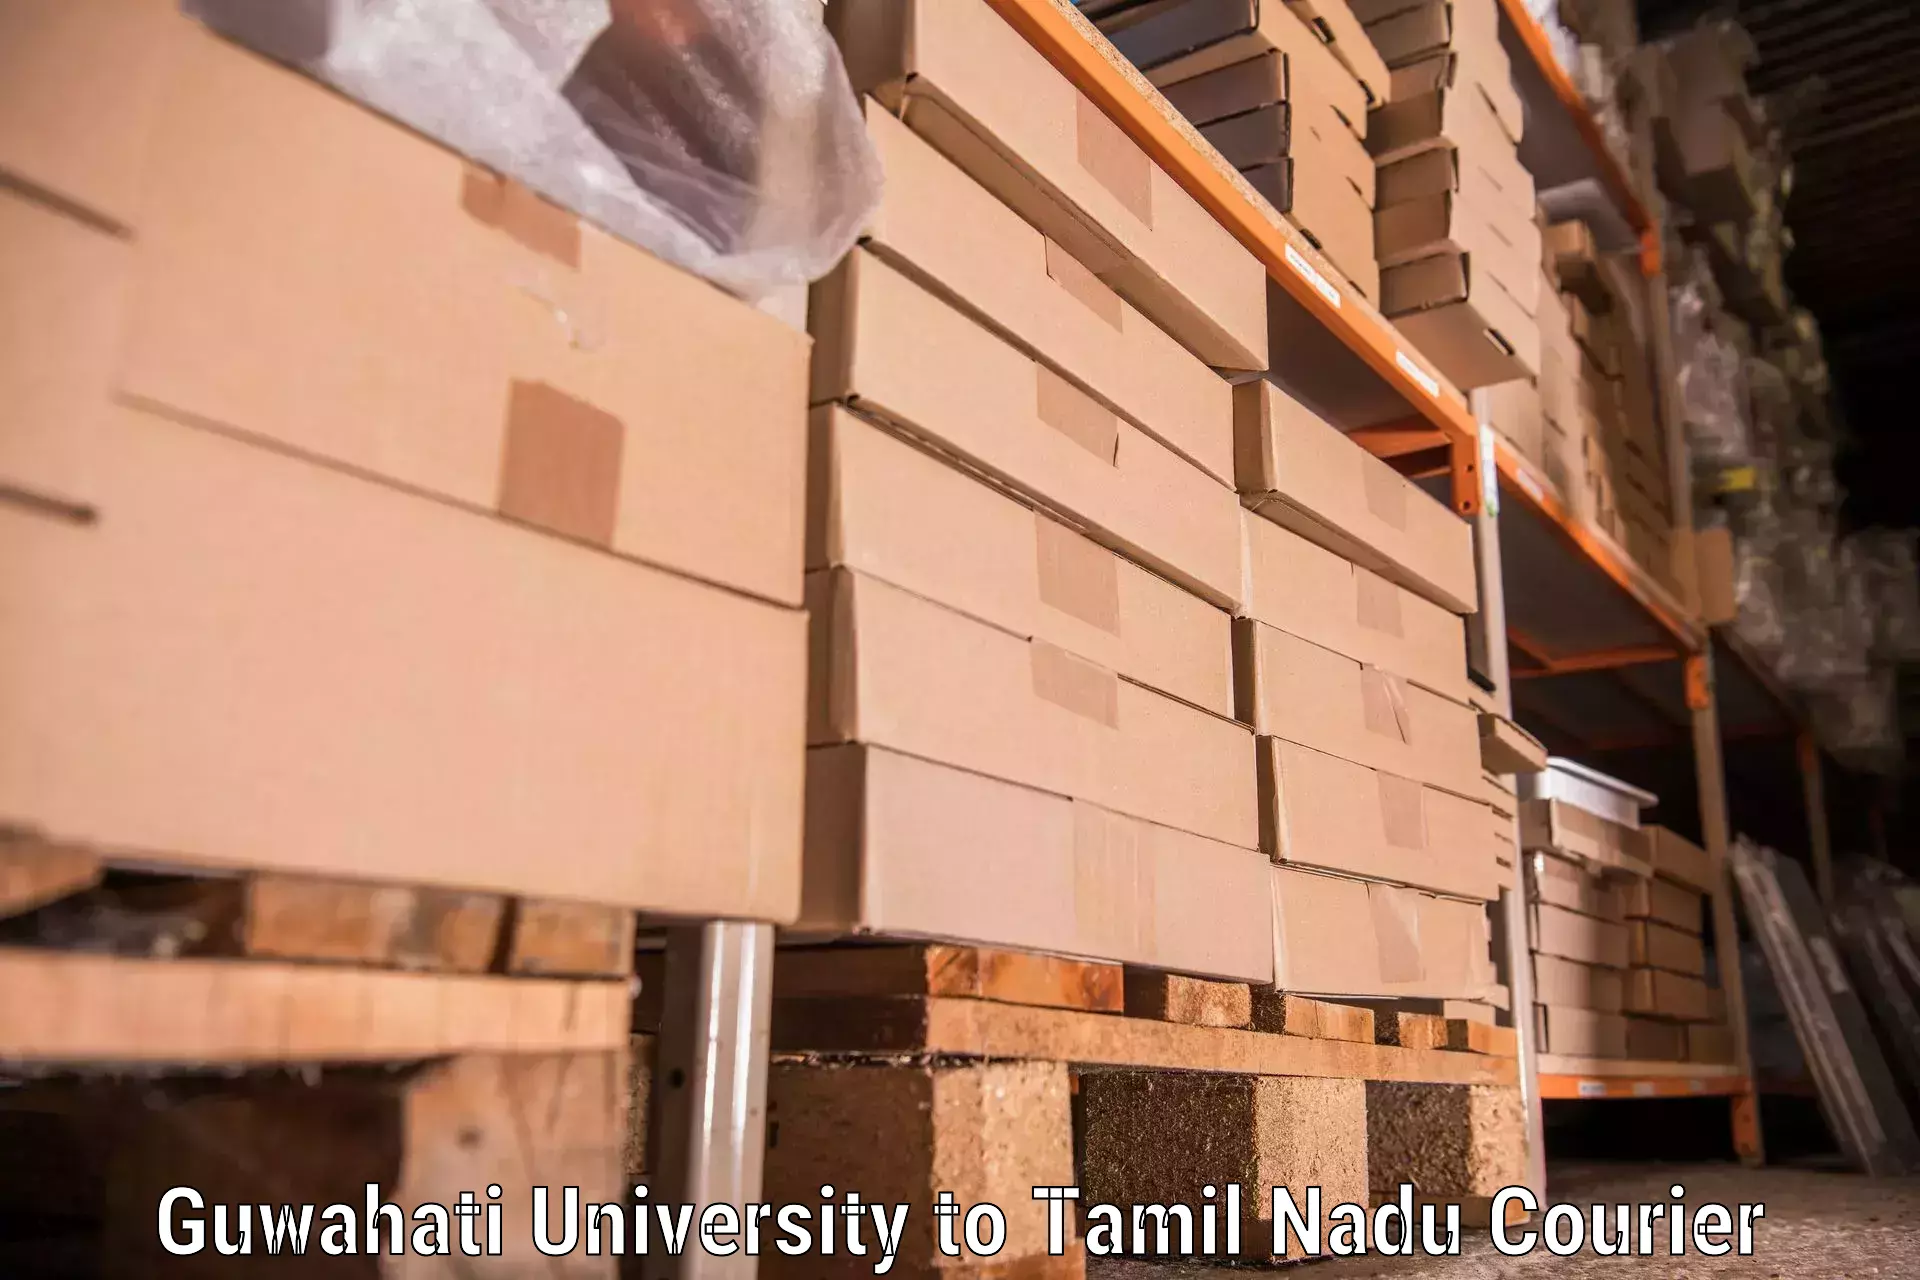 Furniture delivery service Guwahati University to Virudhunagar